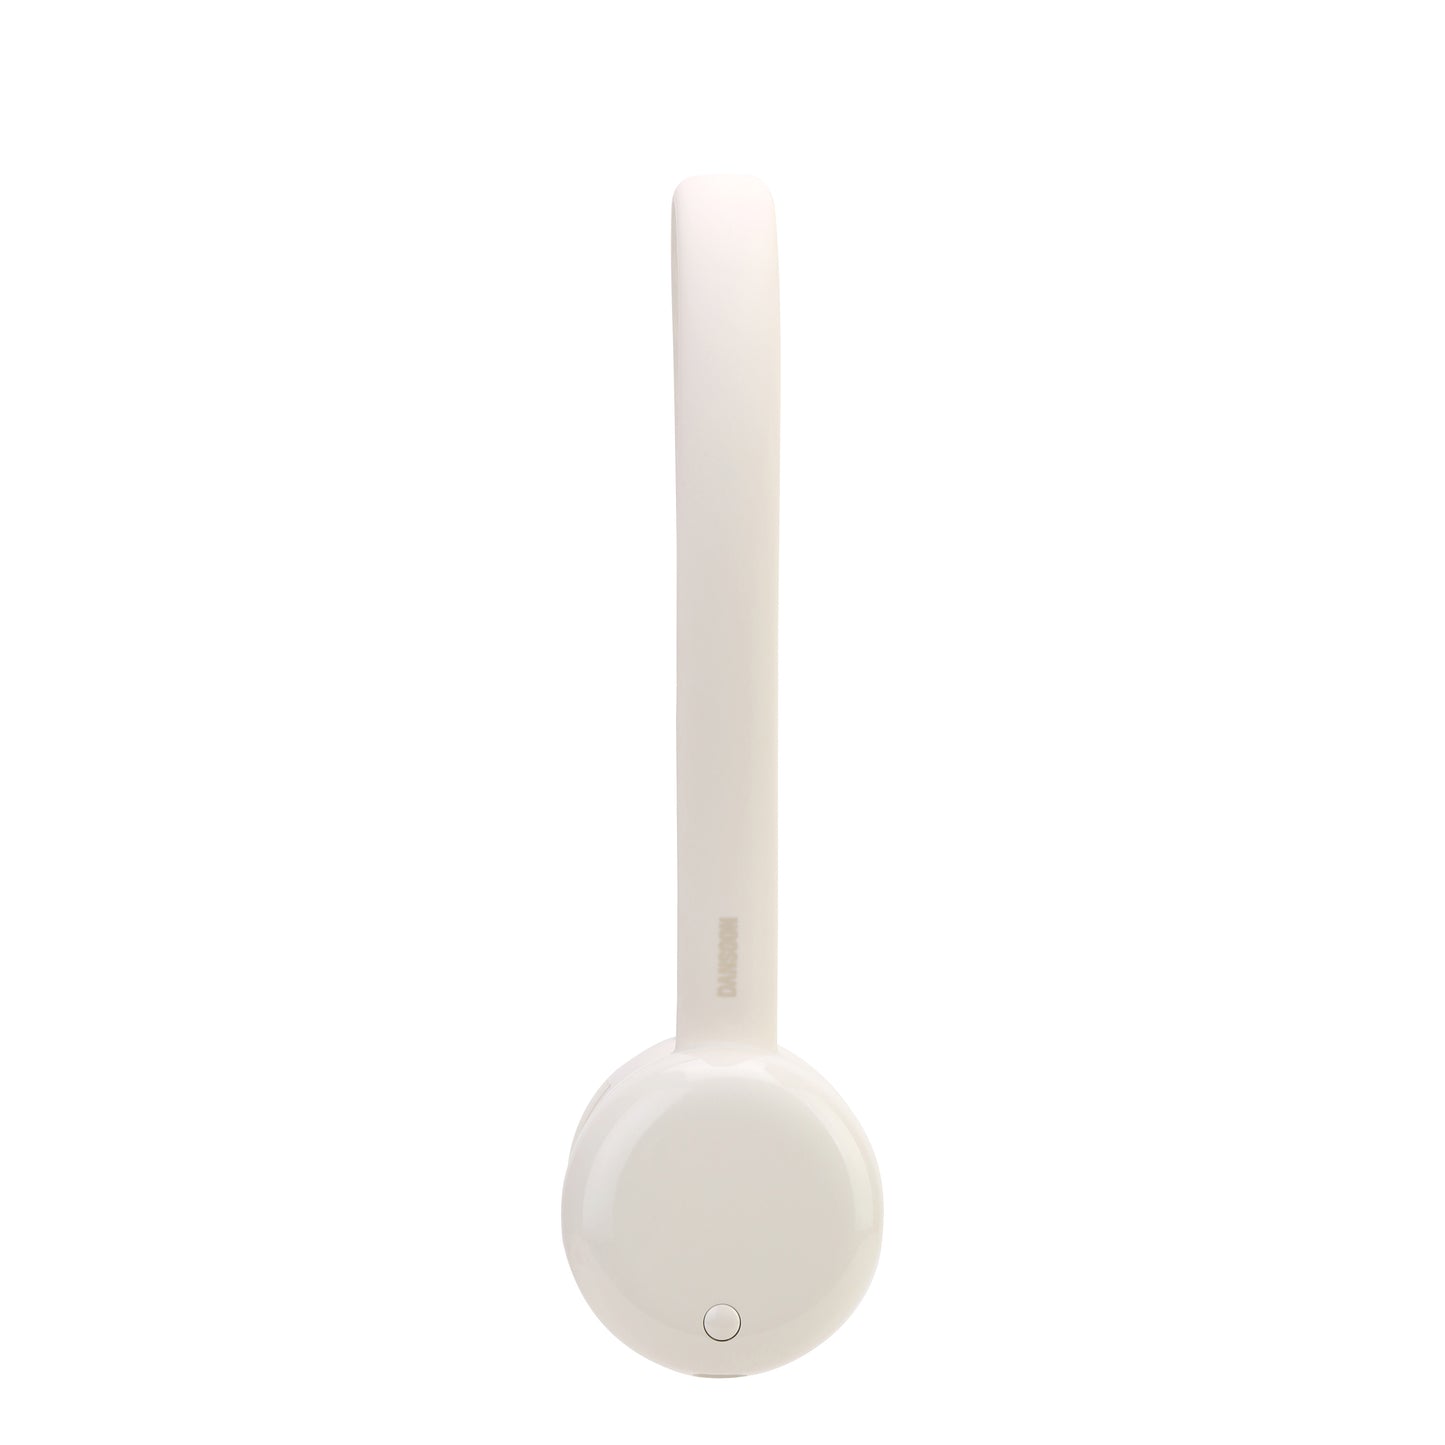 Bladeless Neckband Rechargeable Portable Fan Cream White